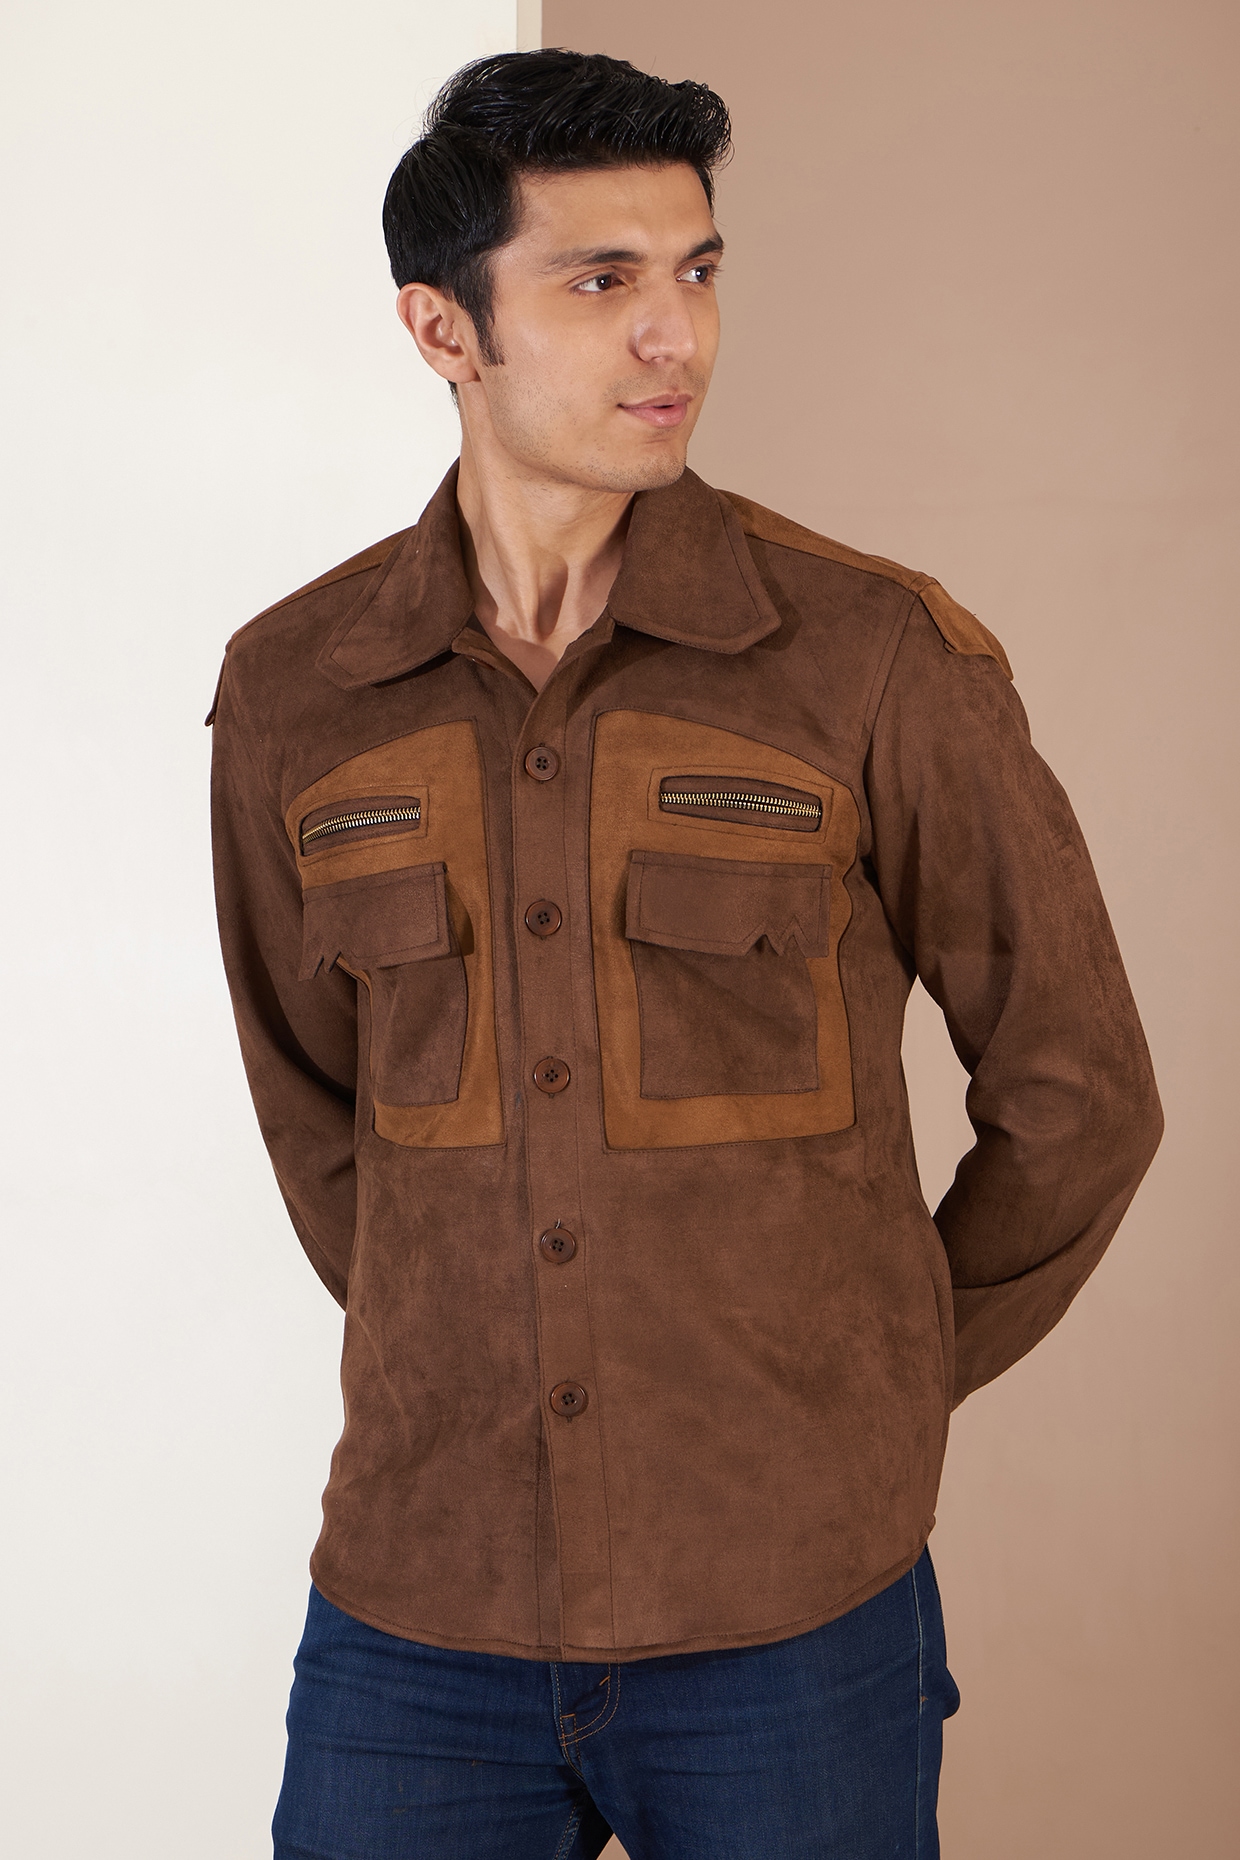 Men's Leather Trucker Jacket- Dark Brown Real Leather Jacket